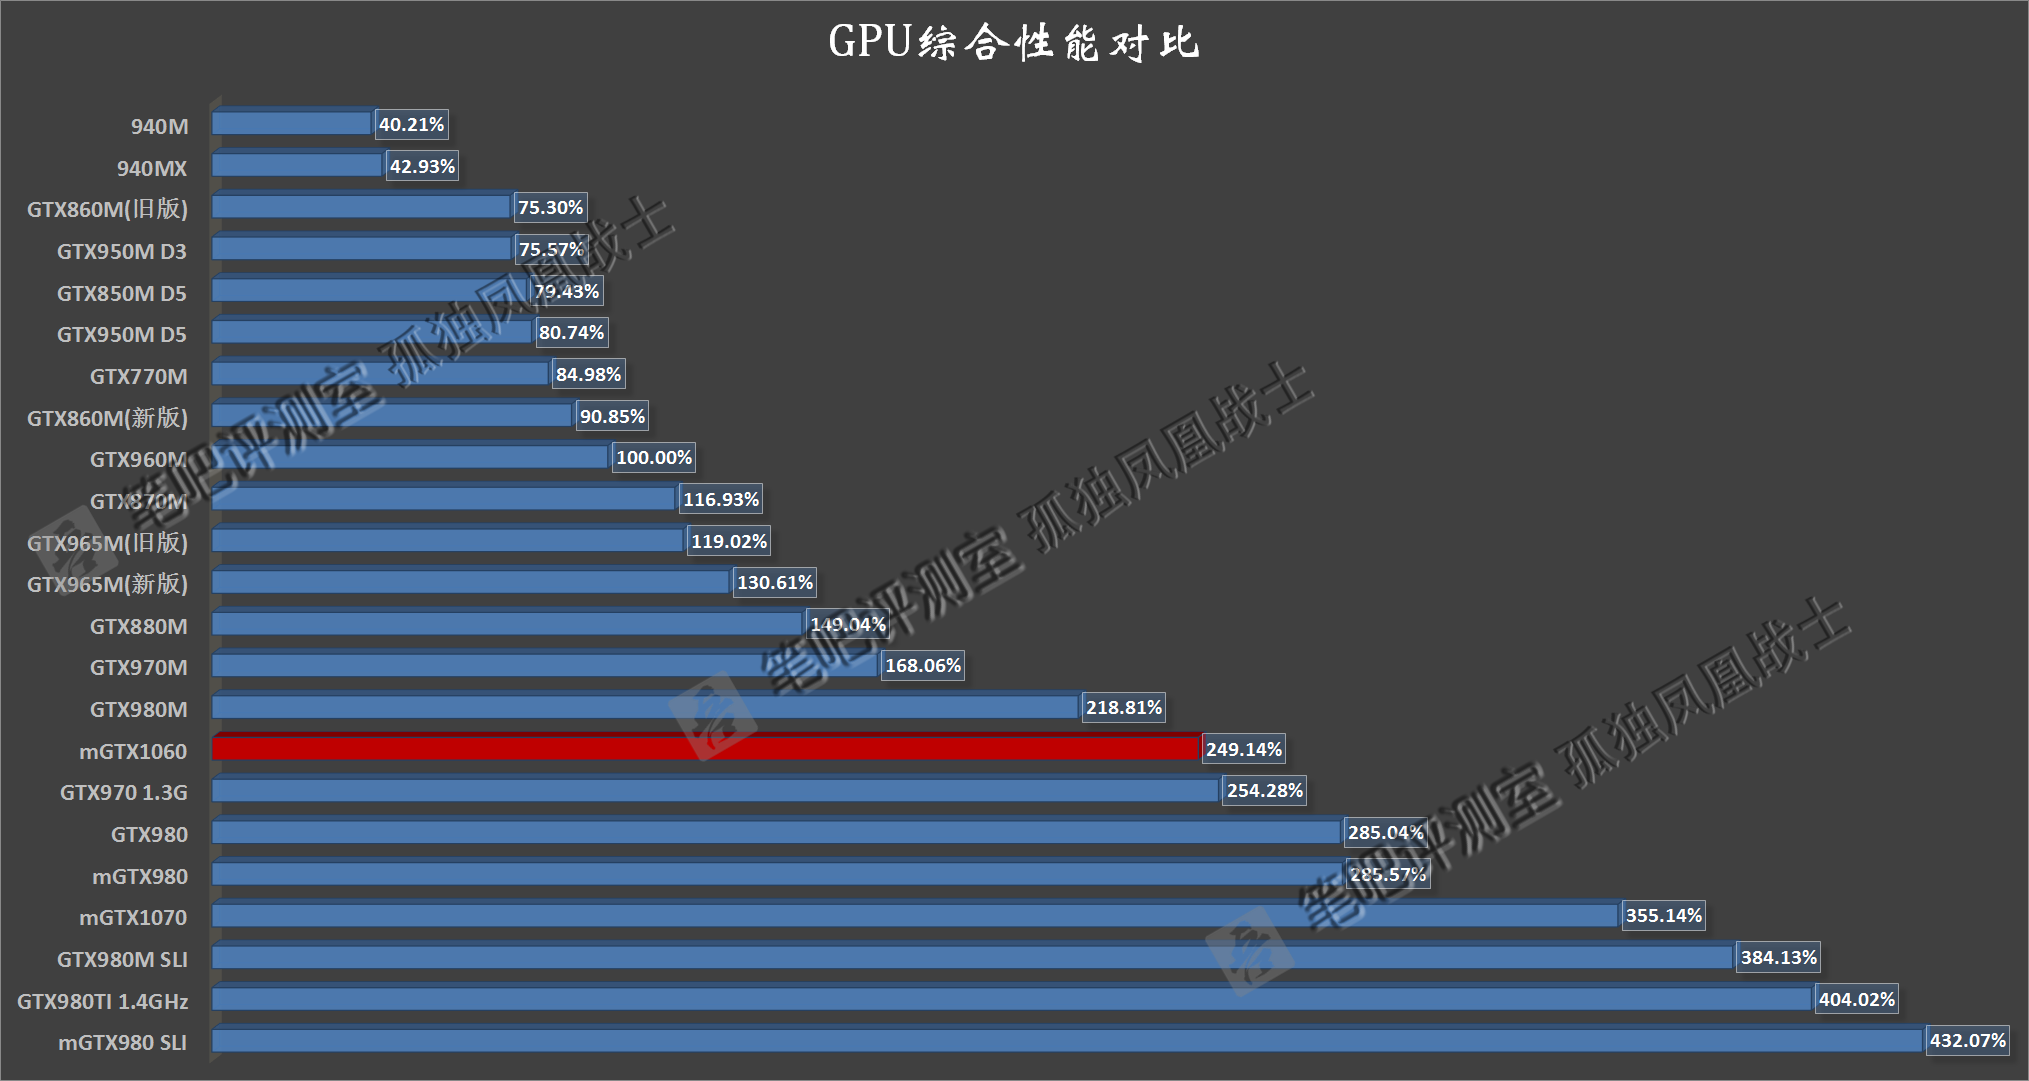 Laptop GPU performance chart? : r/SuggestALaptop